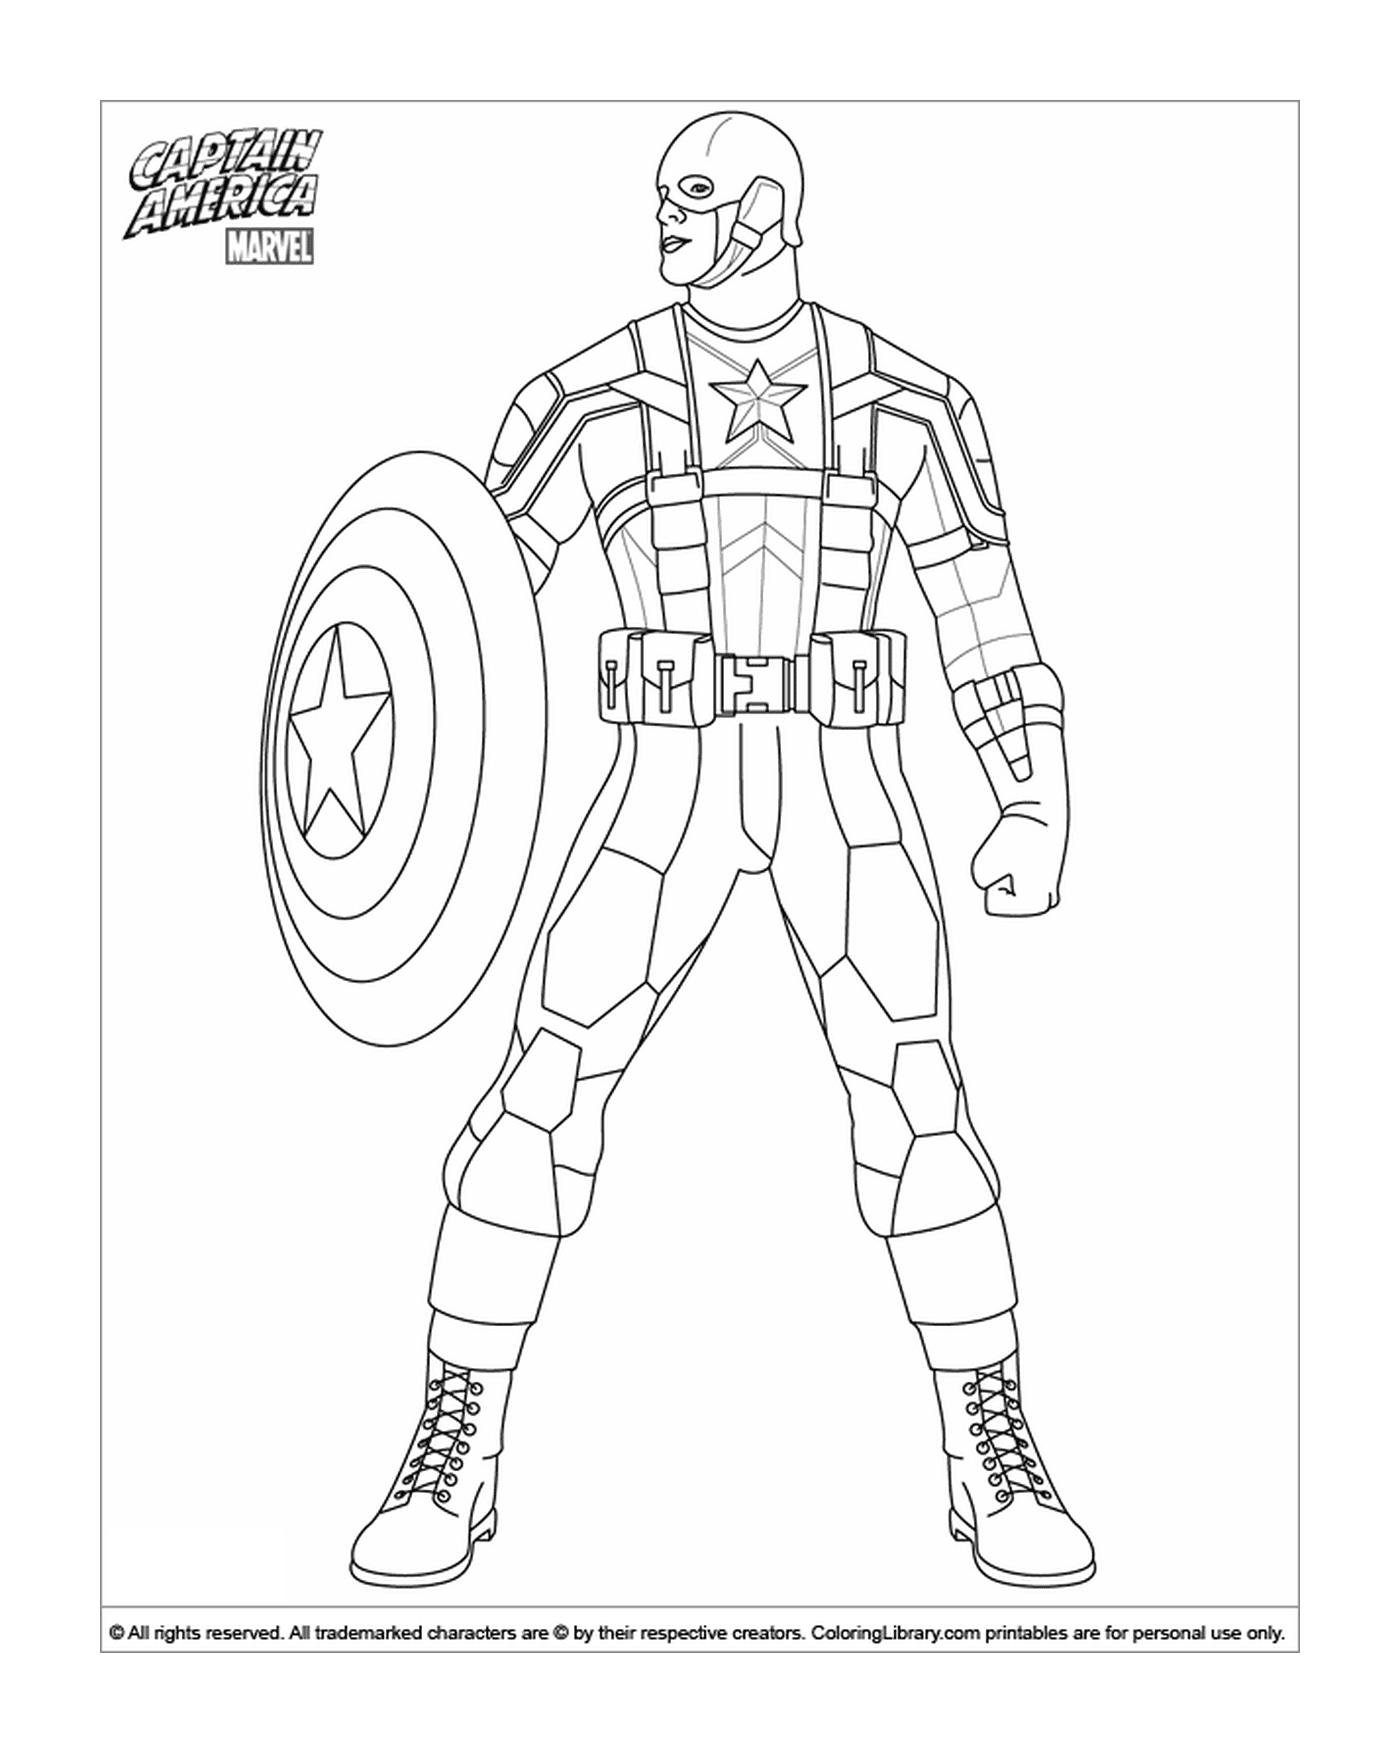  Man in Captain America suit colored 